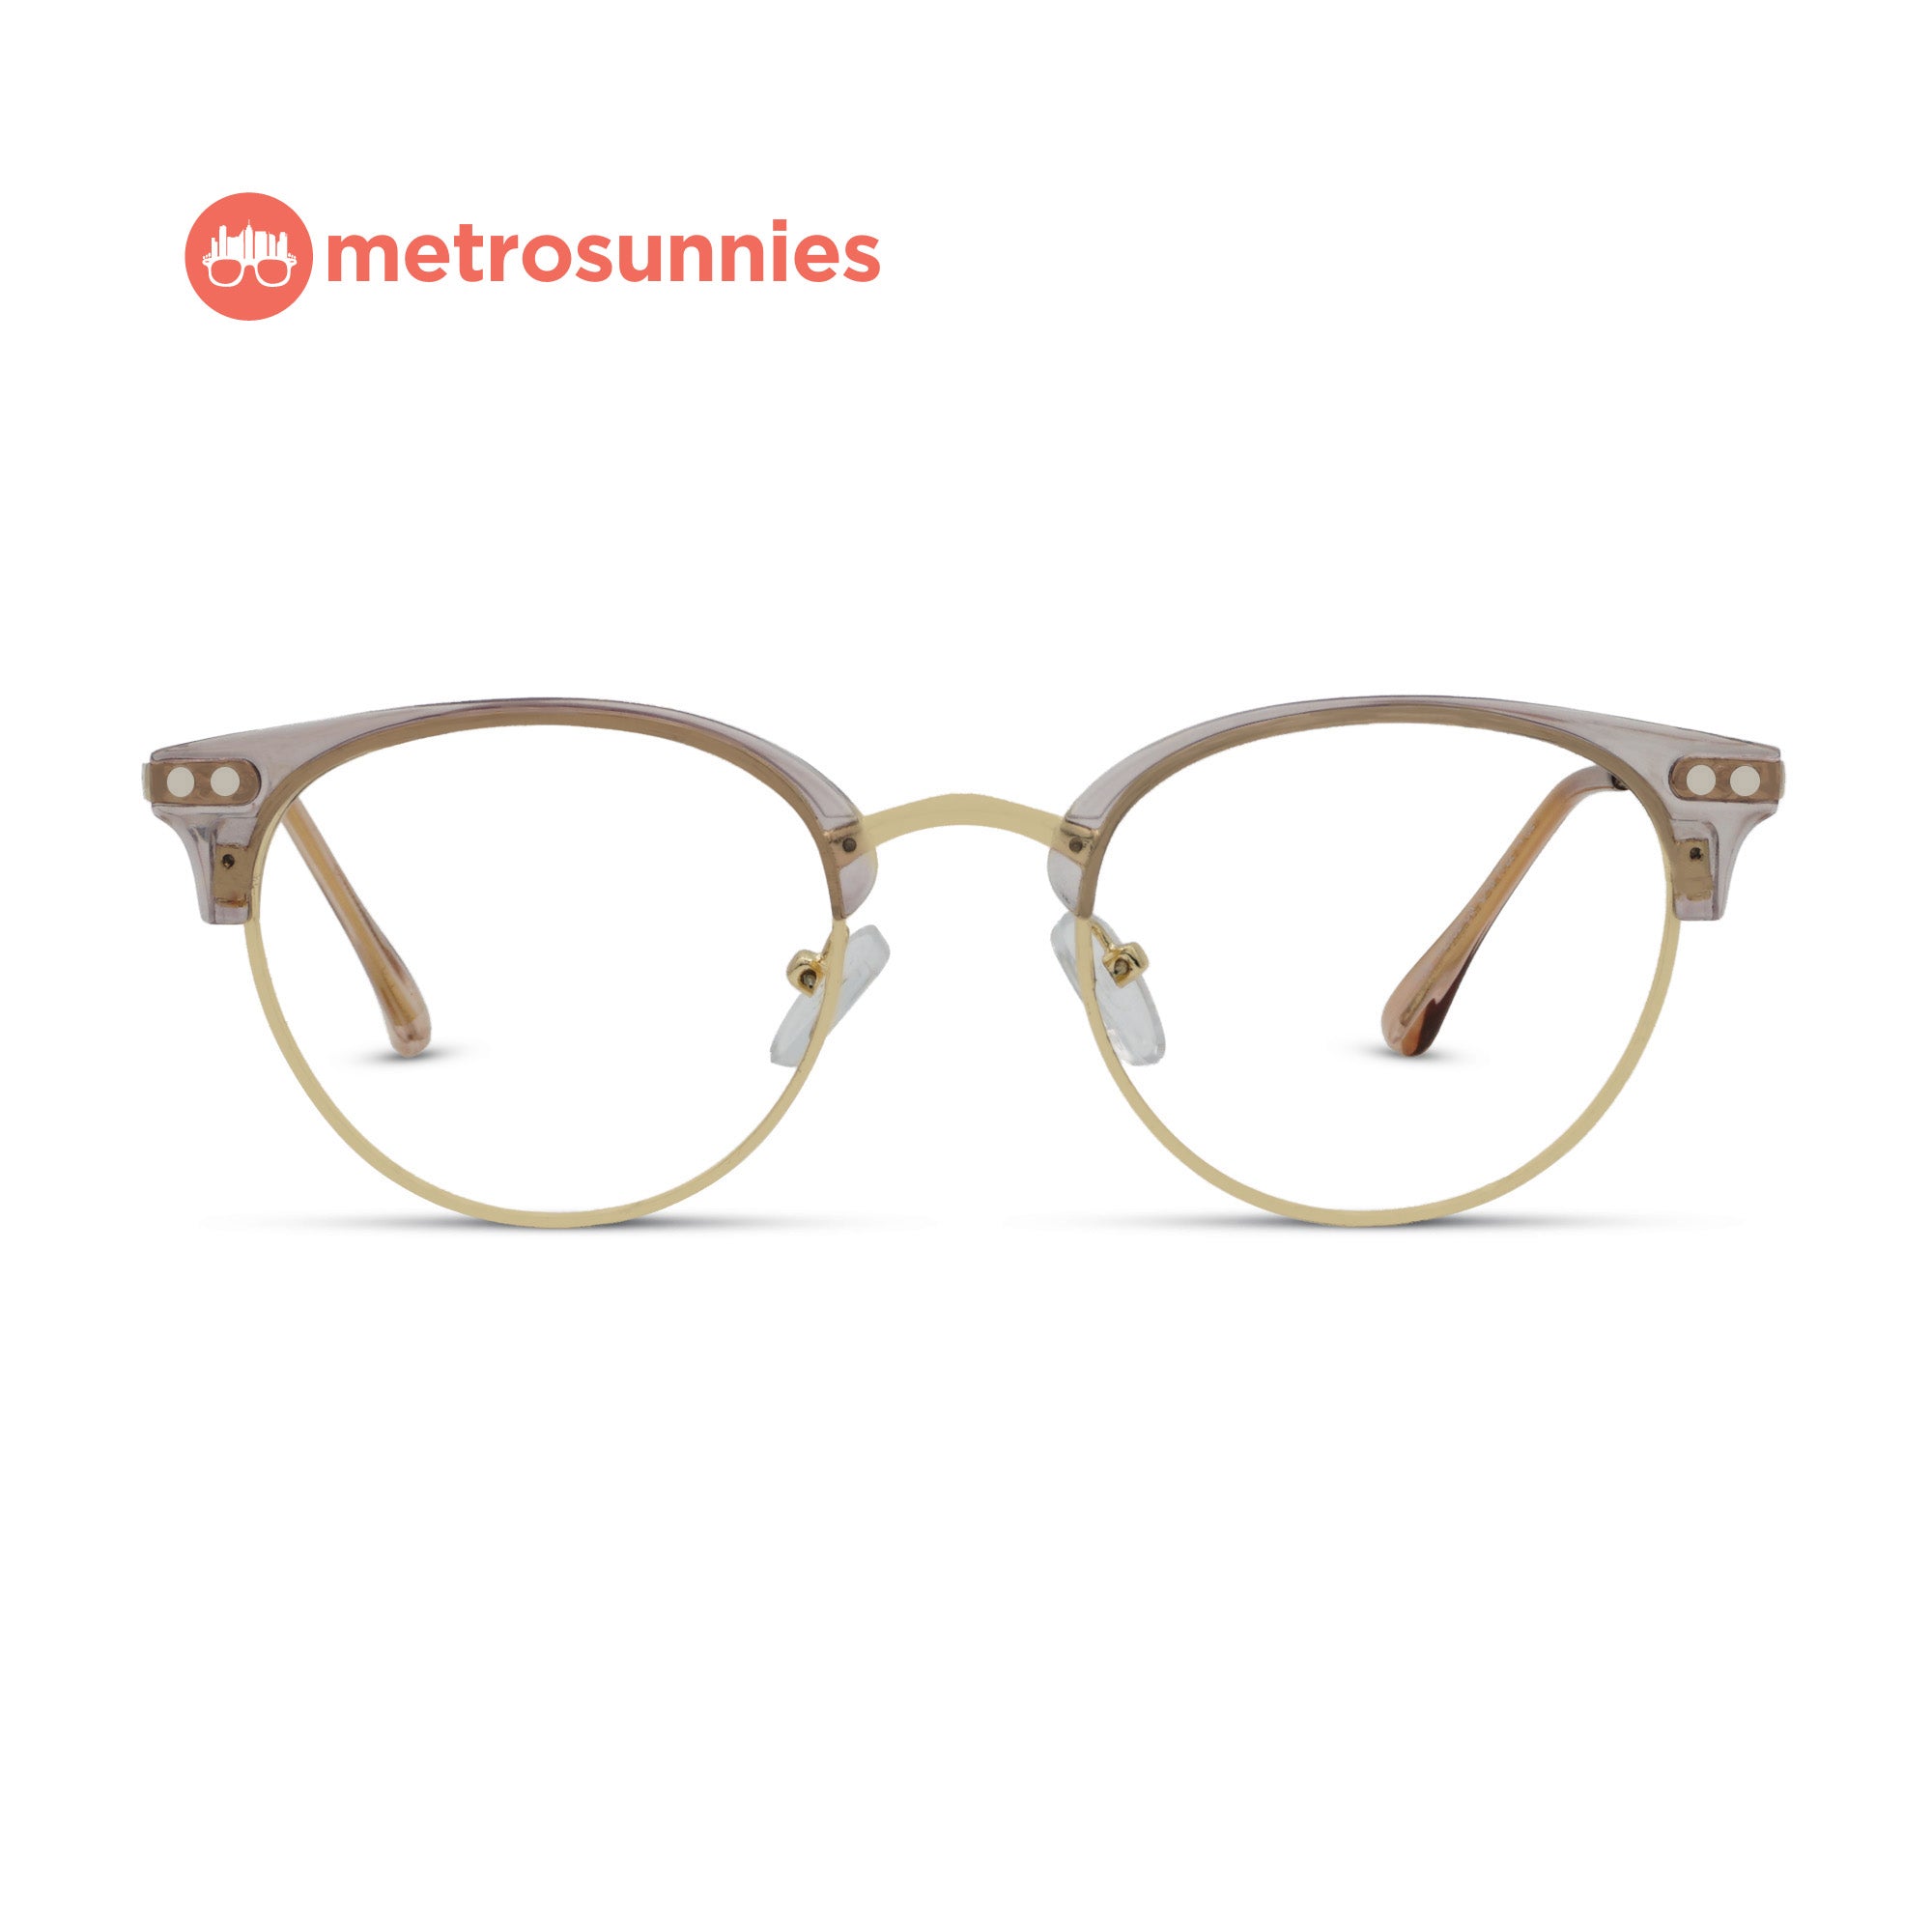 MetroSunnies Sasha Specs (Champagne) / Replaceable Lens / Eyeglasses for Men and Women